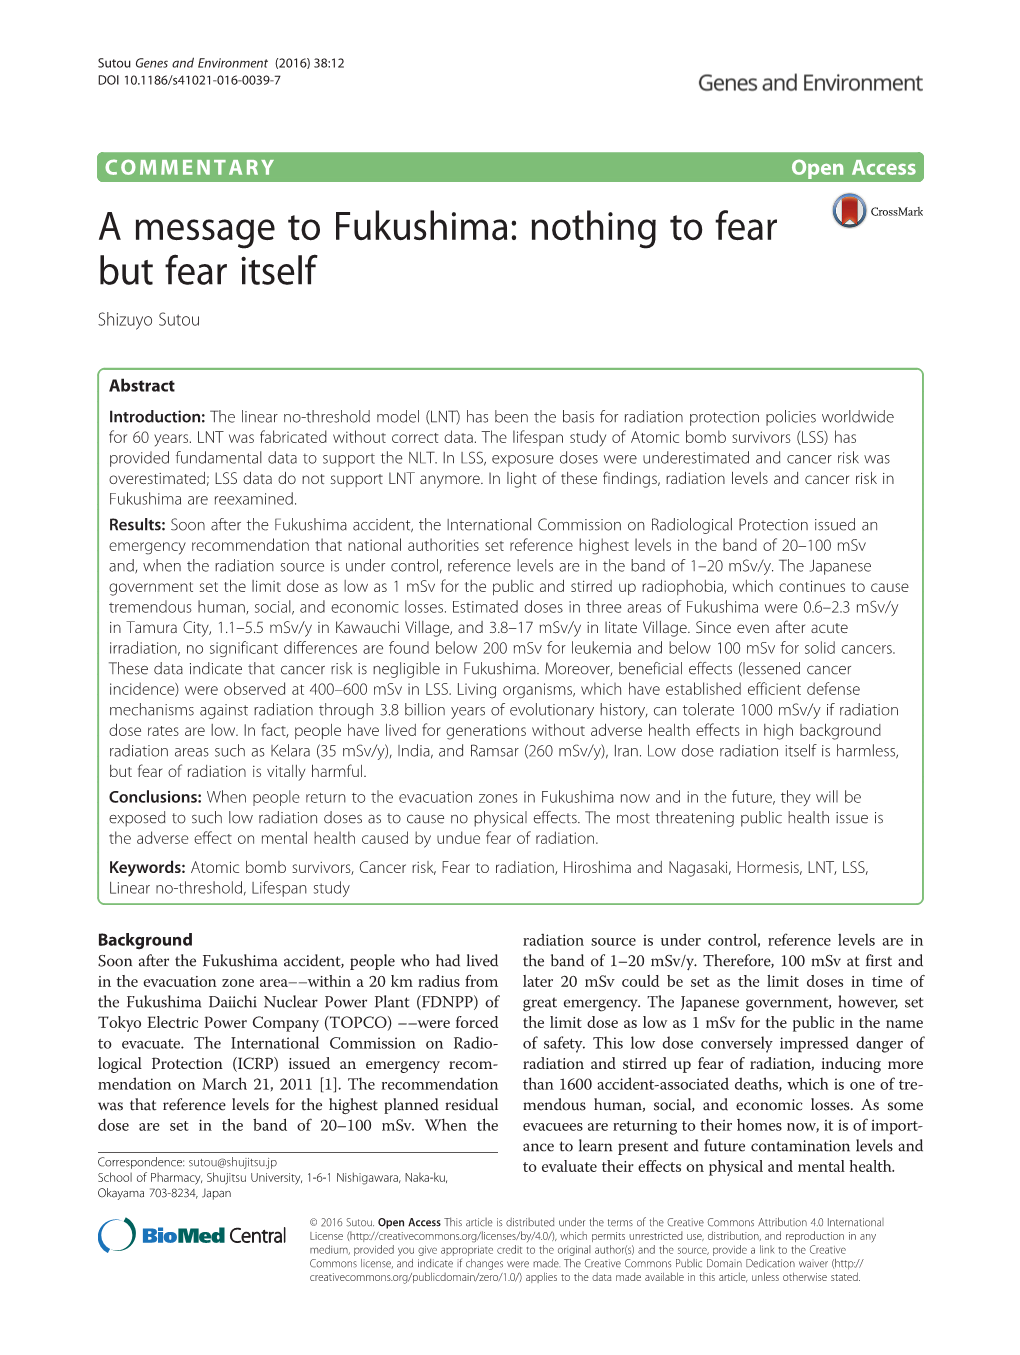 A Message to Fukushima: Nothing to Fear but Fear Itself Shizuyo Sutou